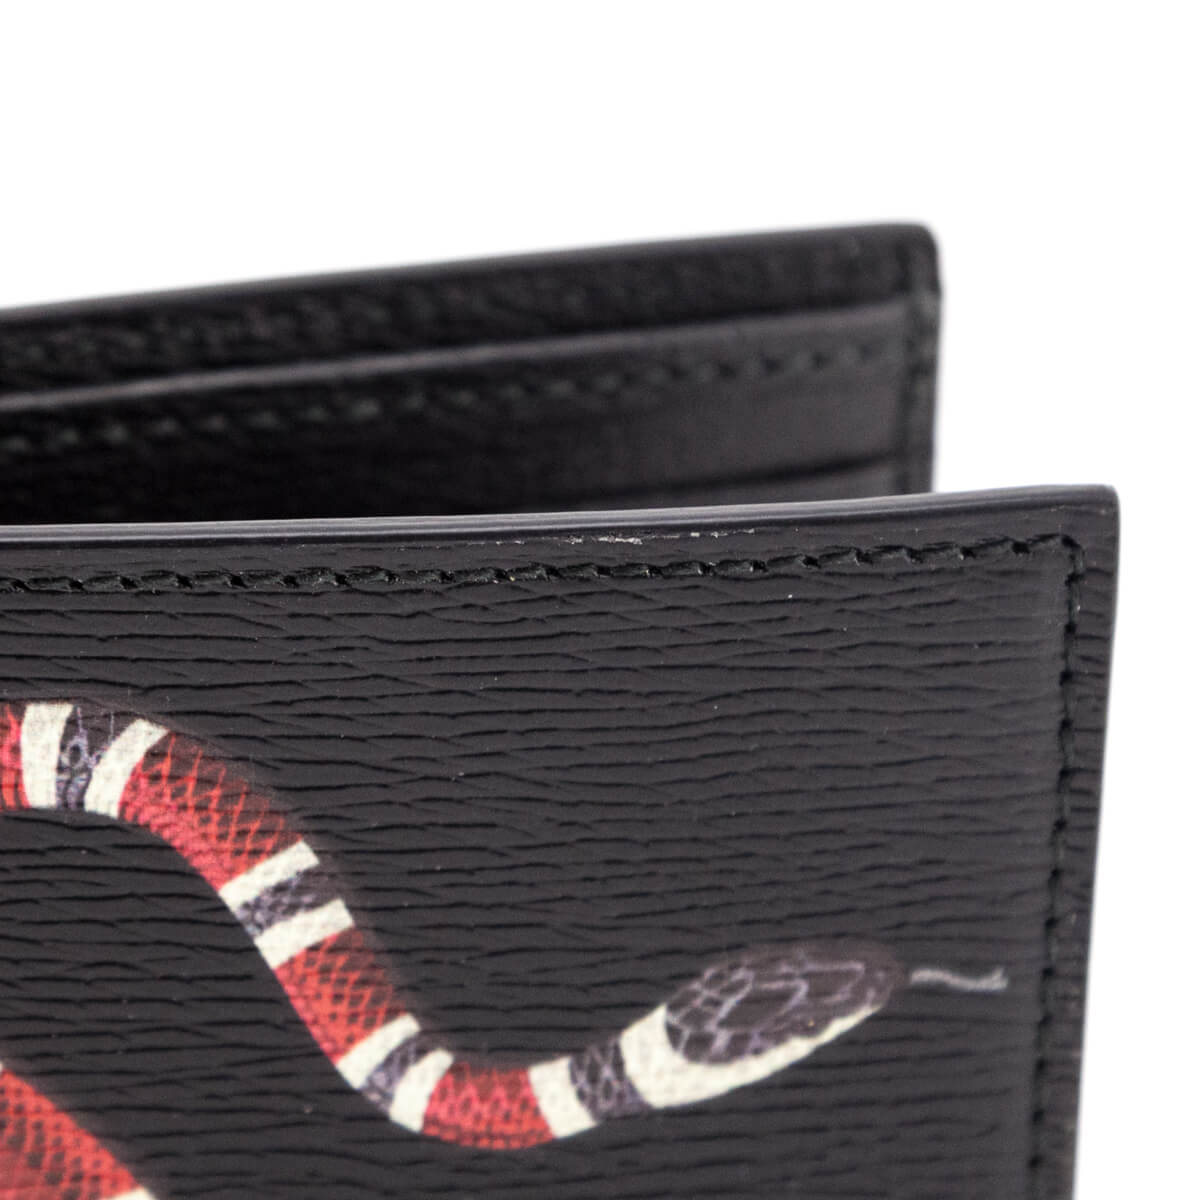 gucci wallet snake